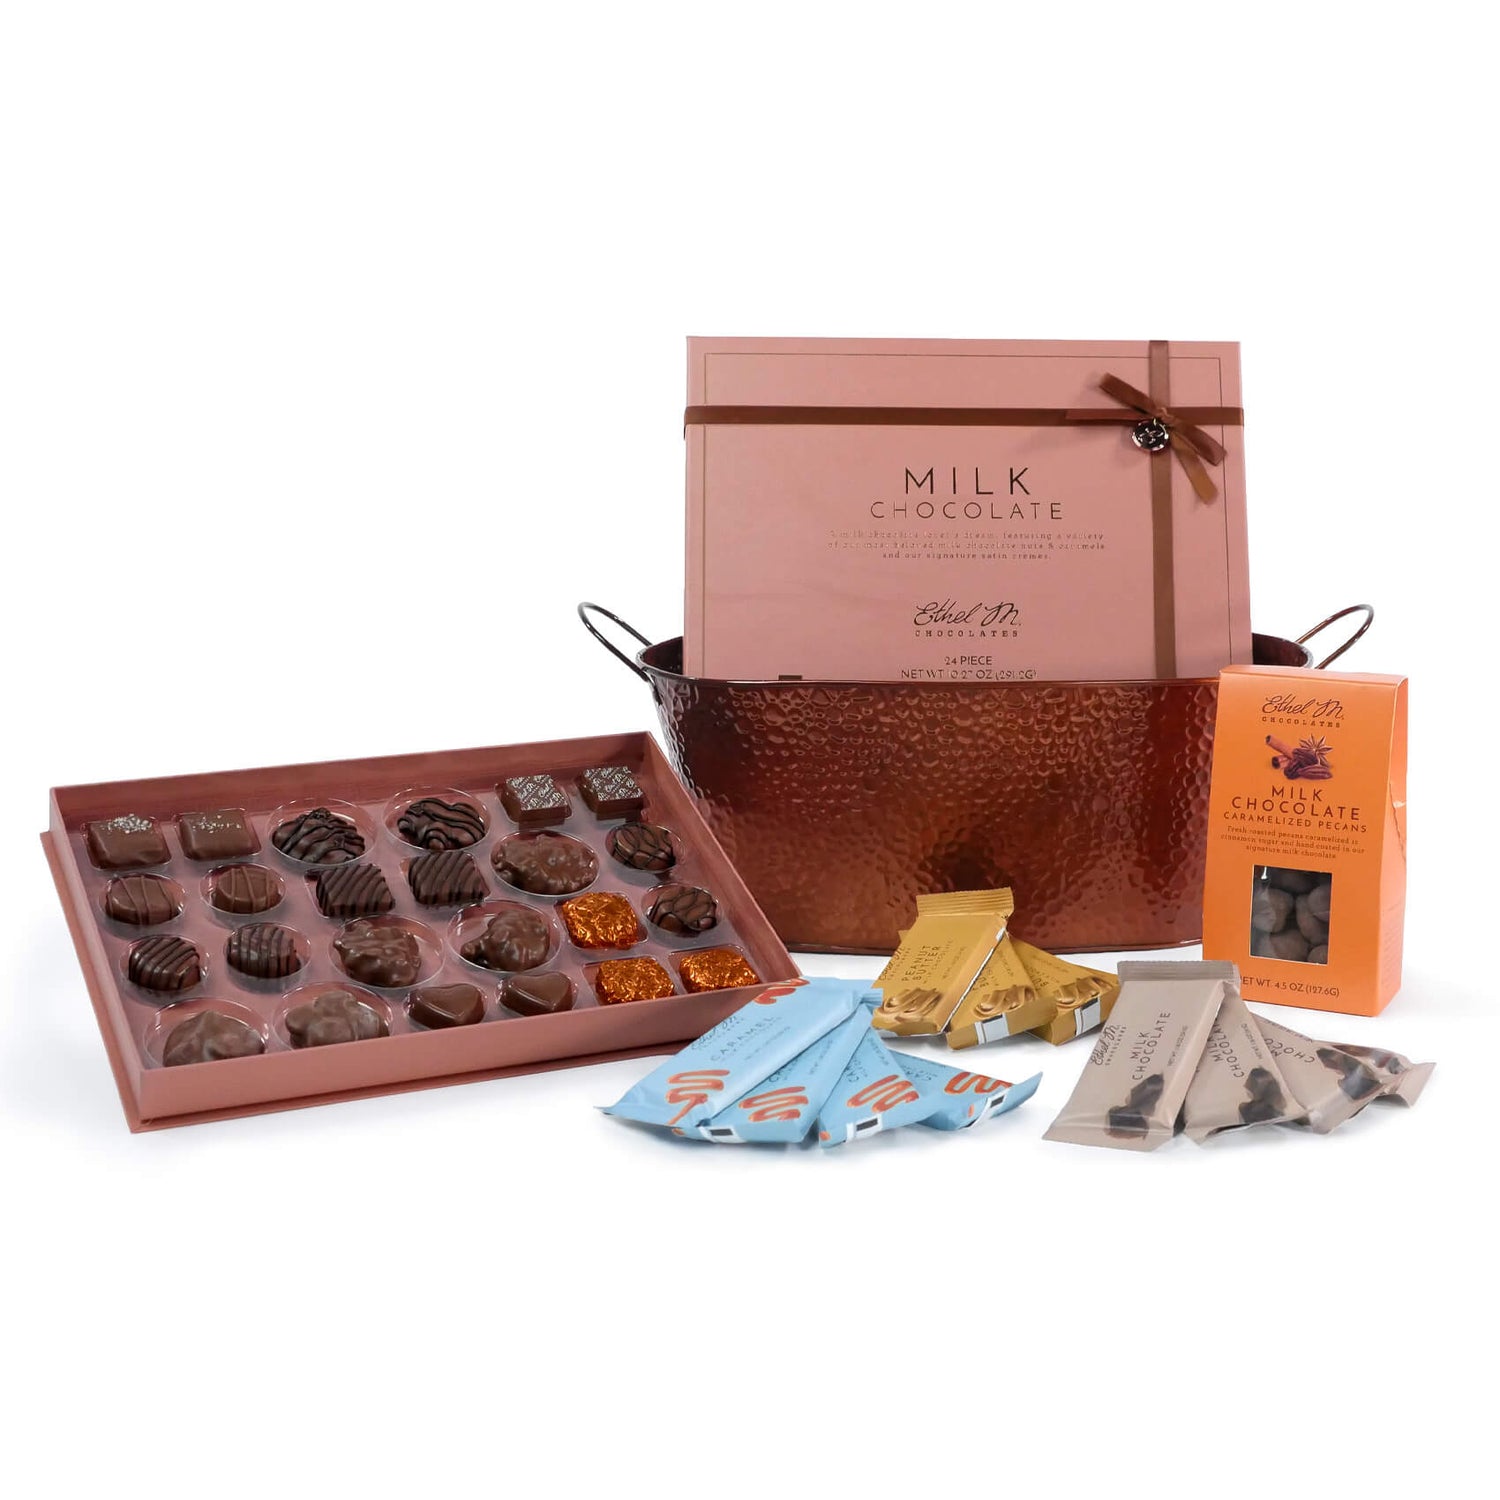 Explosion Box EASY MAKING! | DIY Chocolate EXPLOSION BOX - YouTube